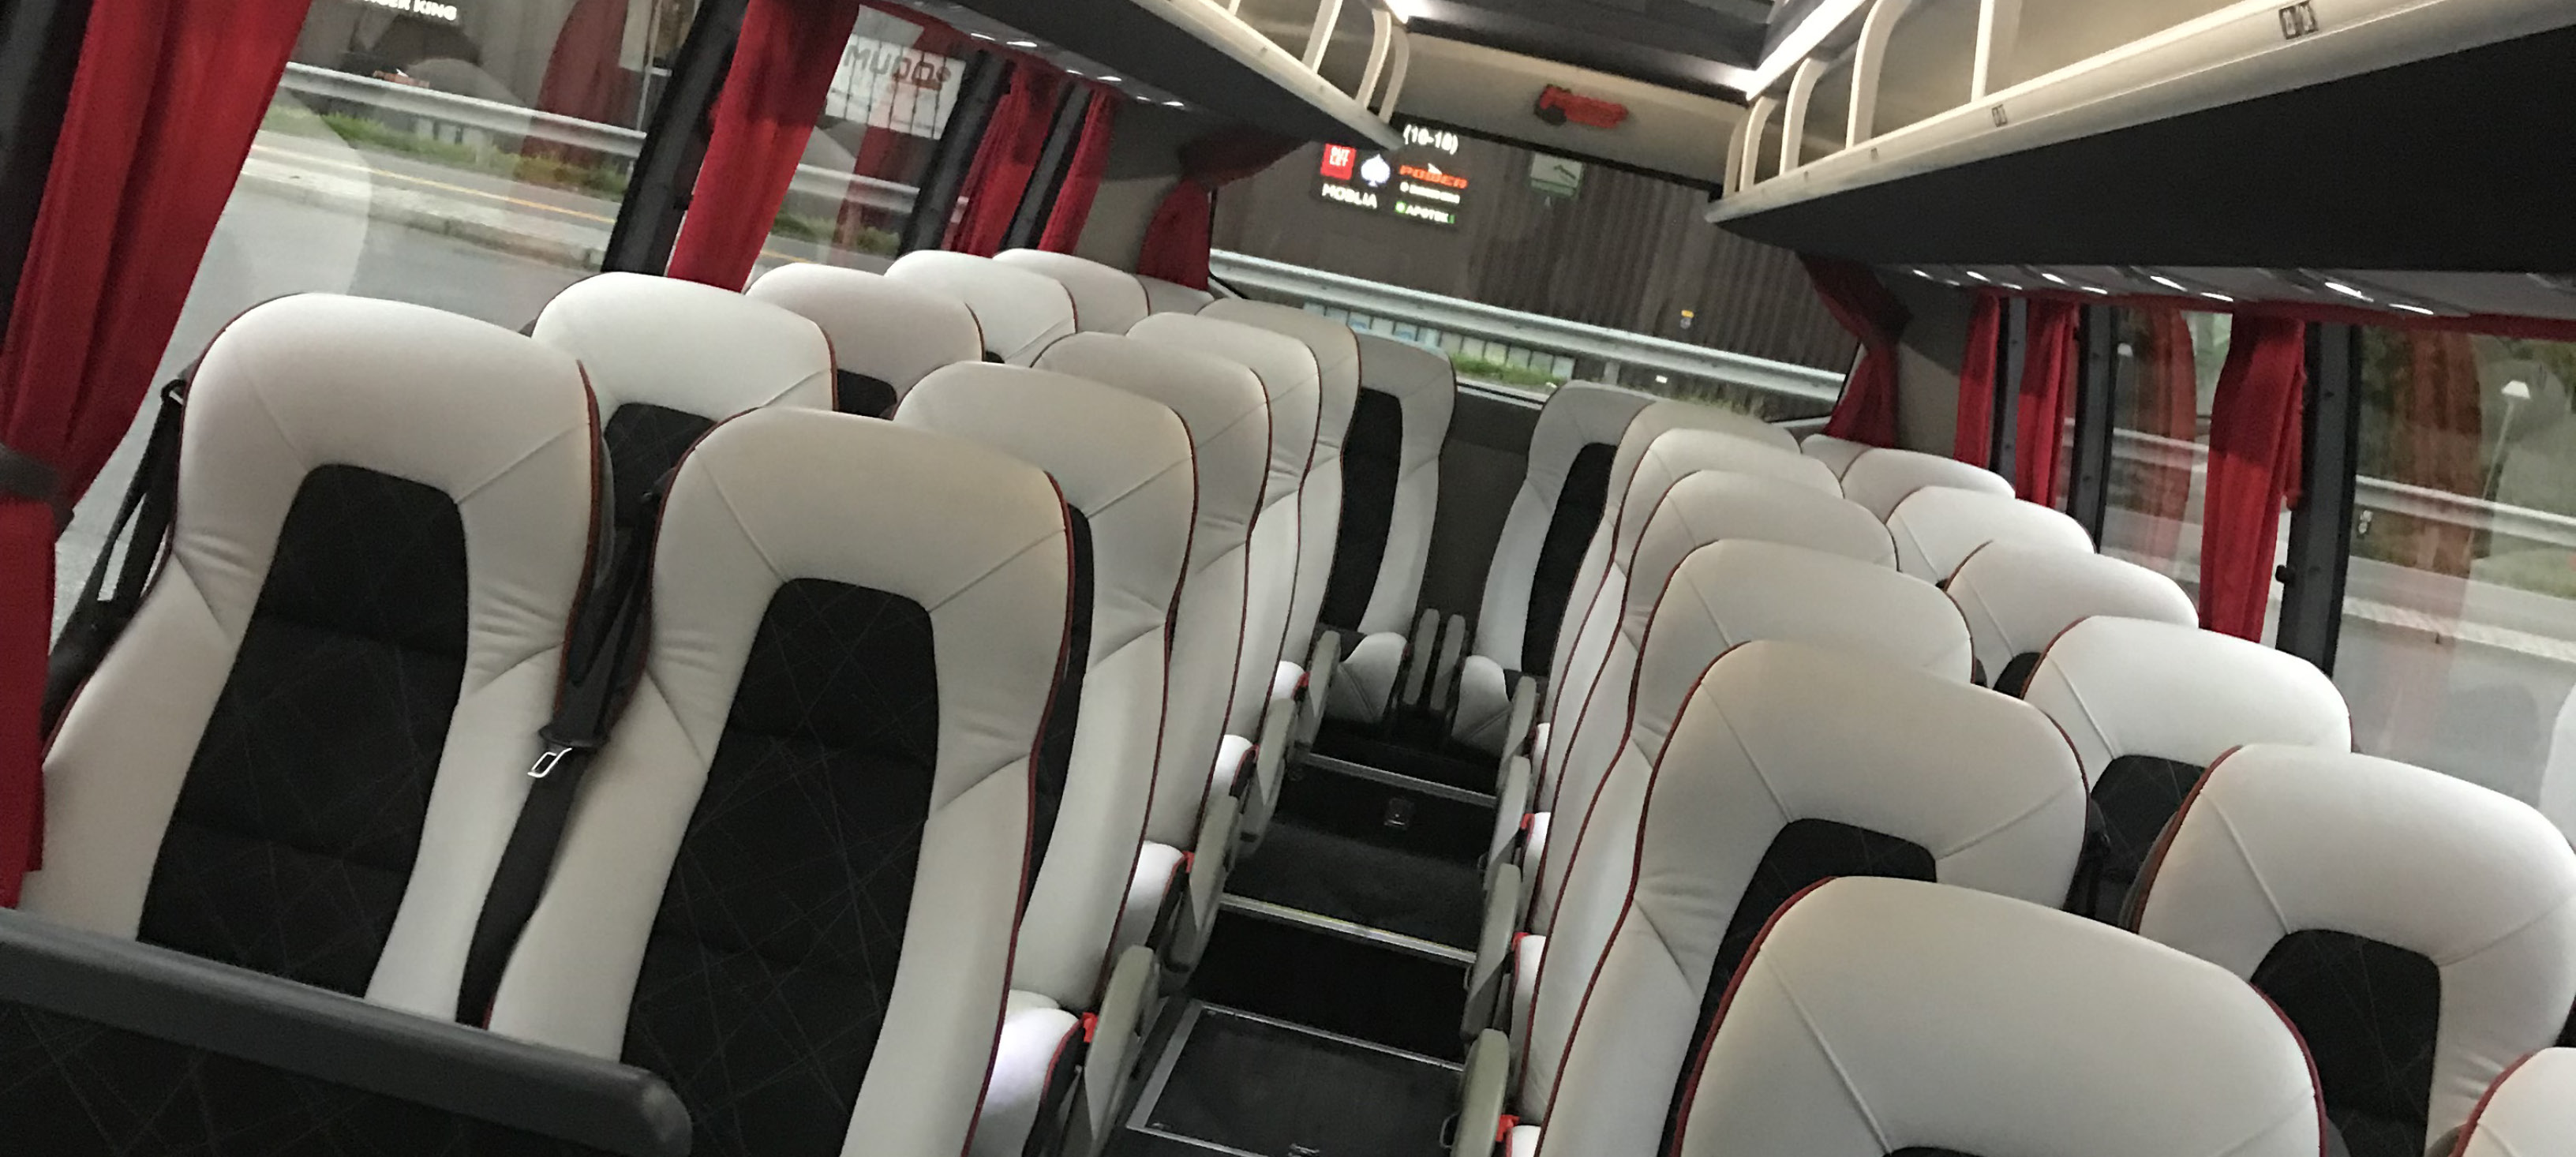 interiør i bussen hvit rød og sort